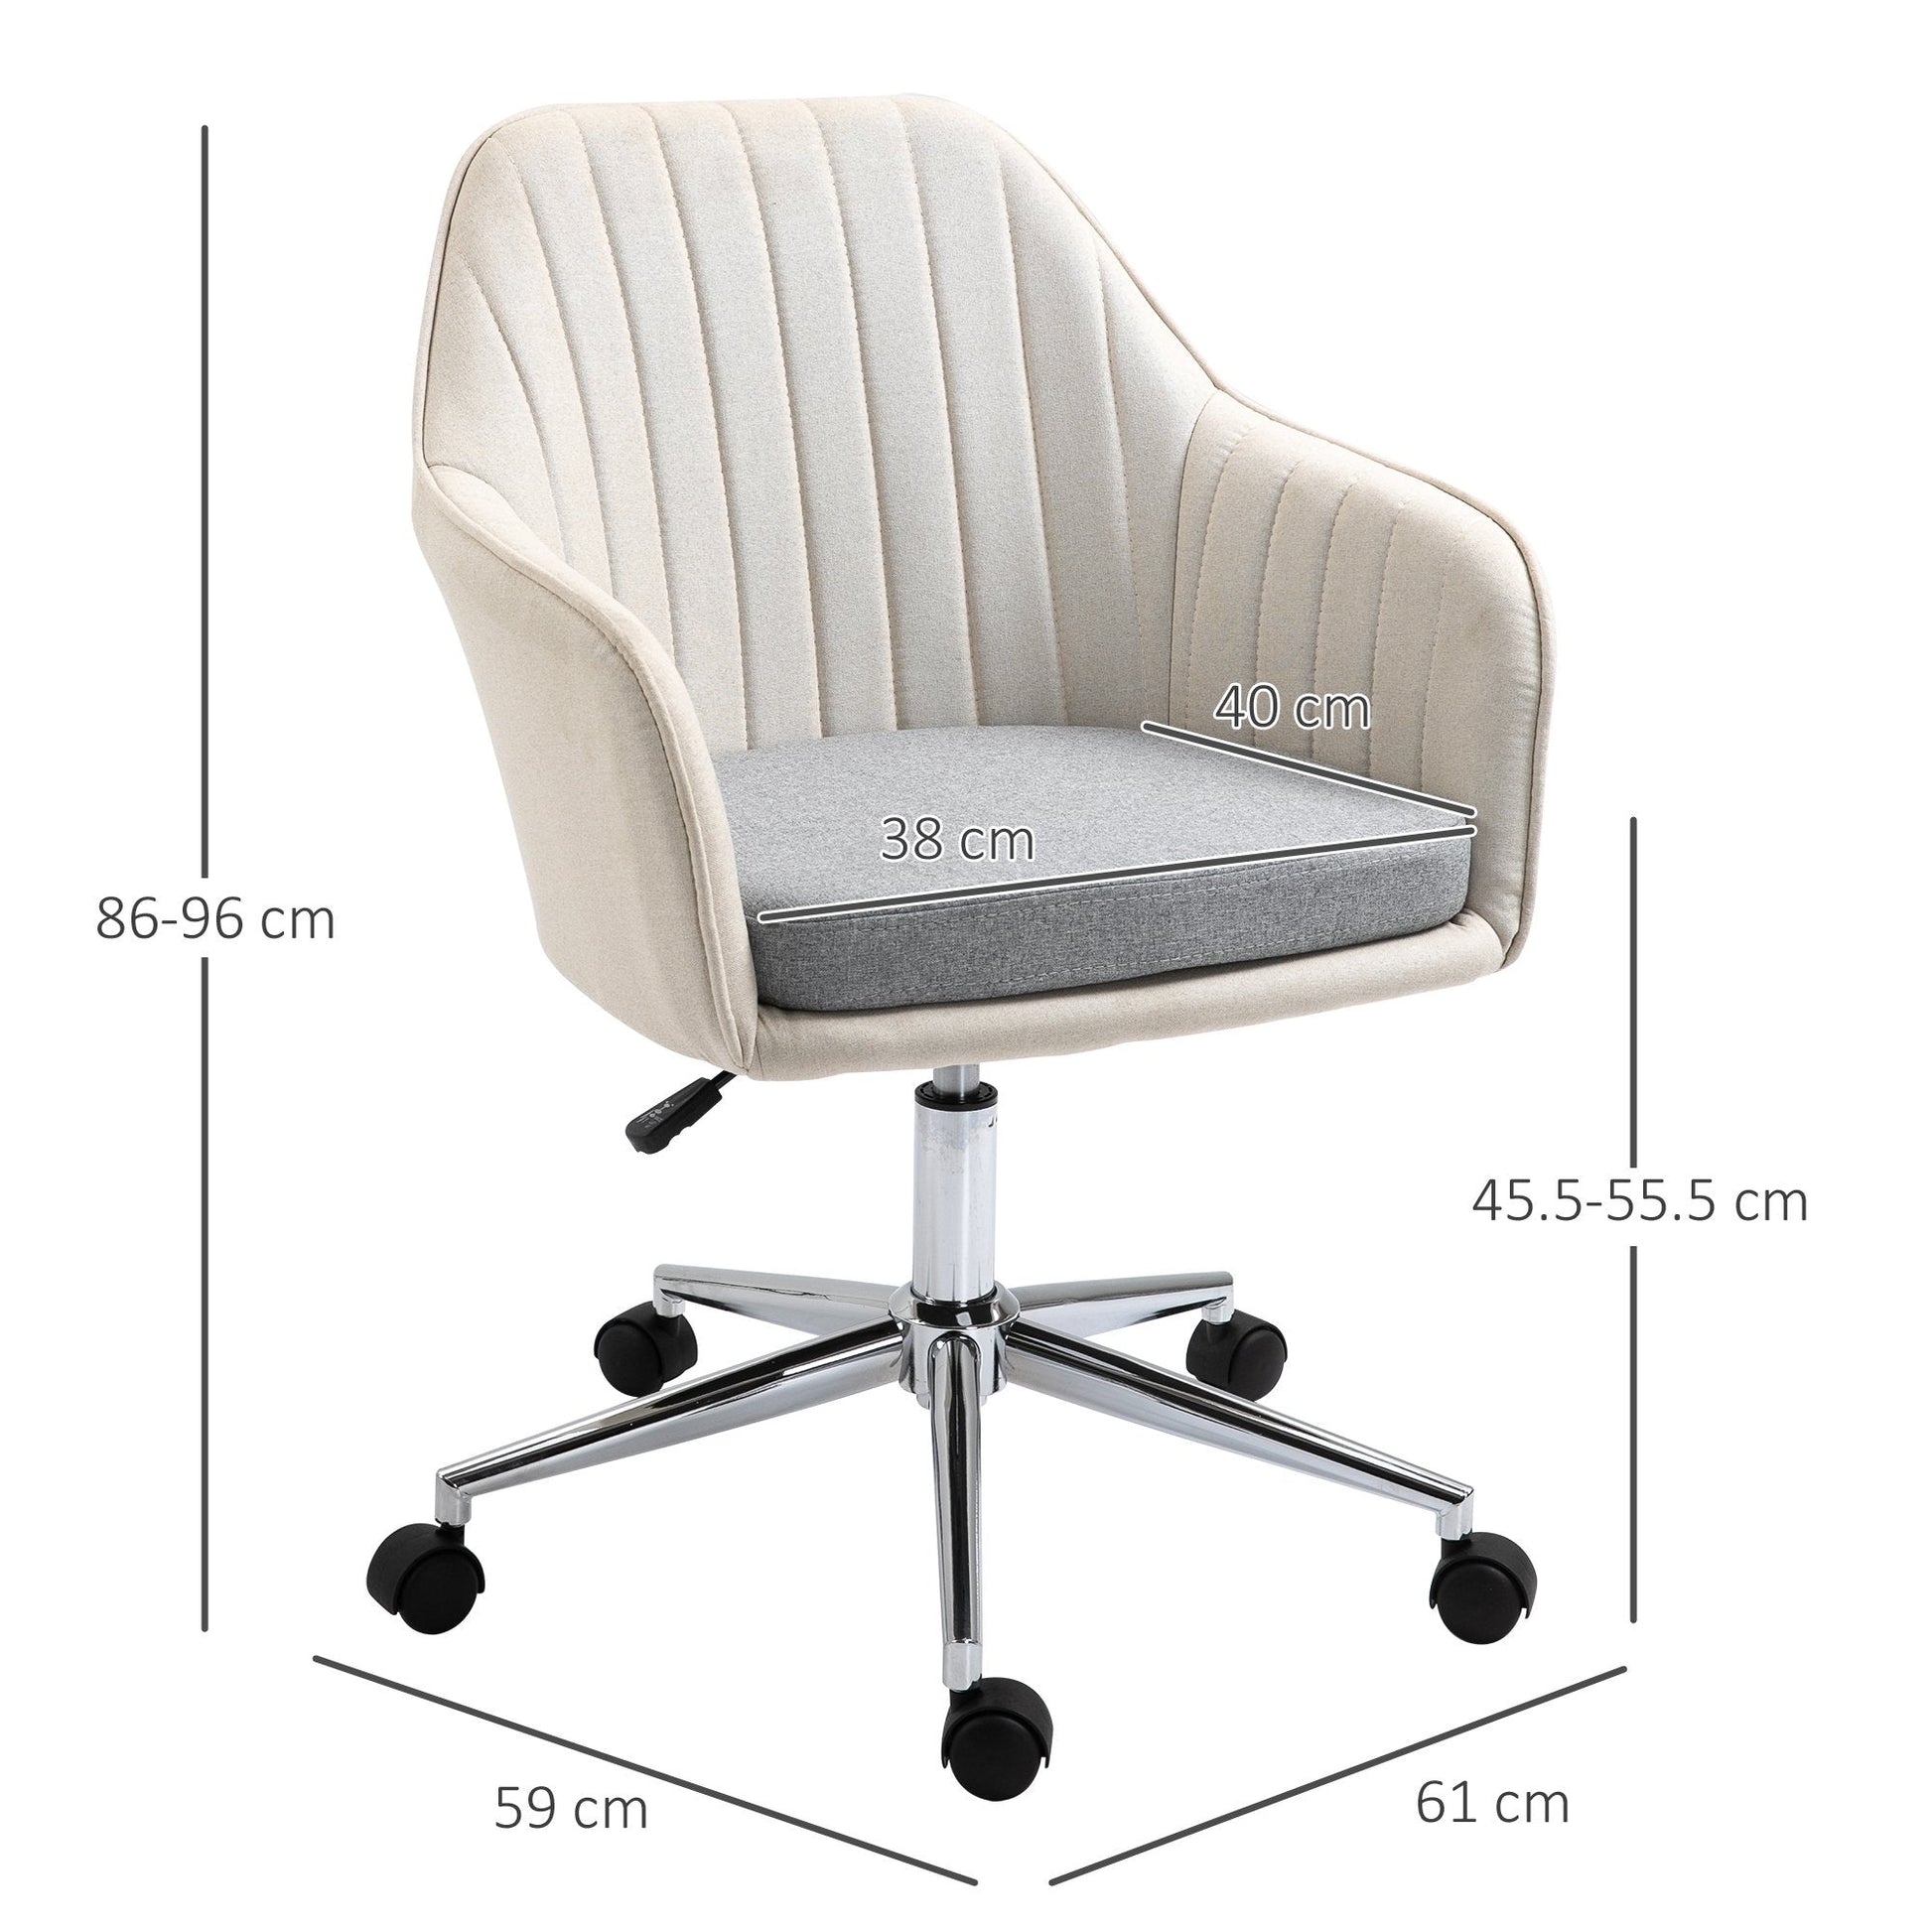 ProperAV Extra Leisure Linen Fabric Swivel Scallop Shape Office Chair with Wheels - Beige - maplin.co.uk